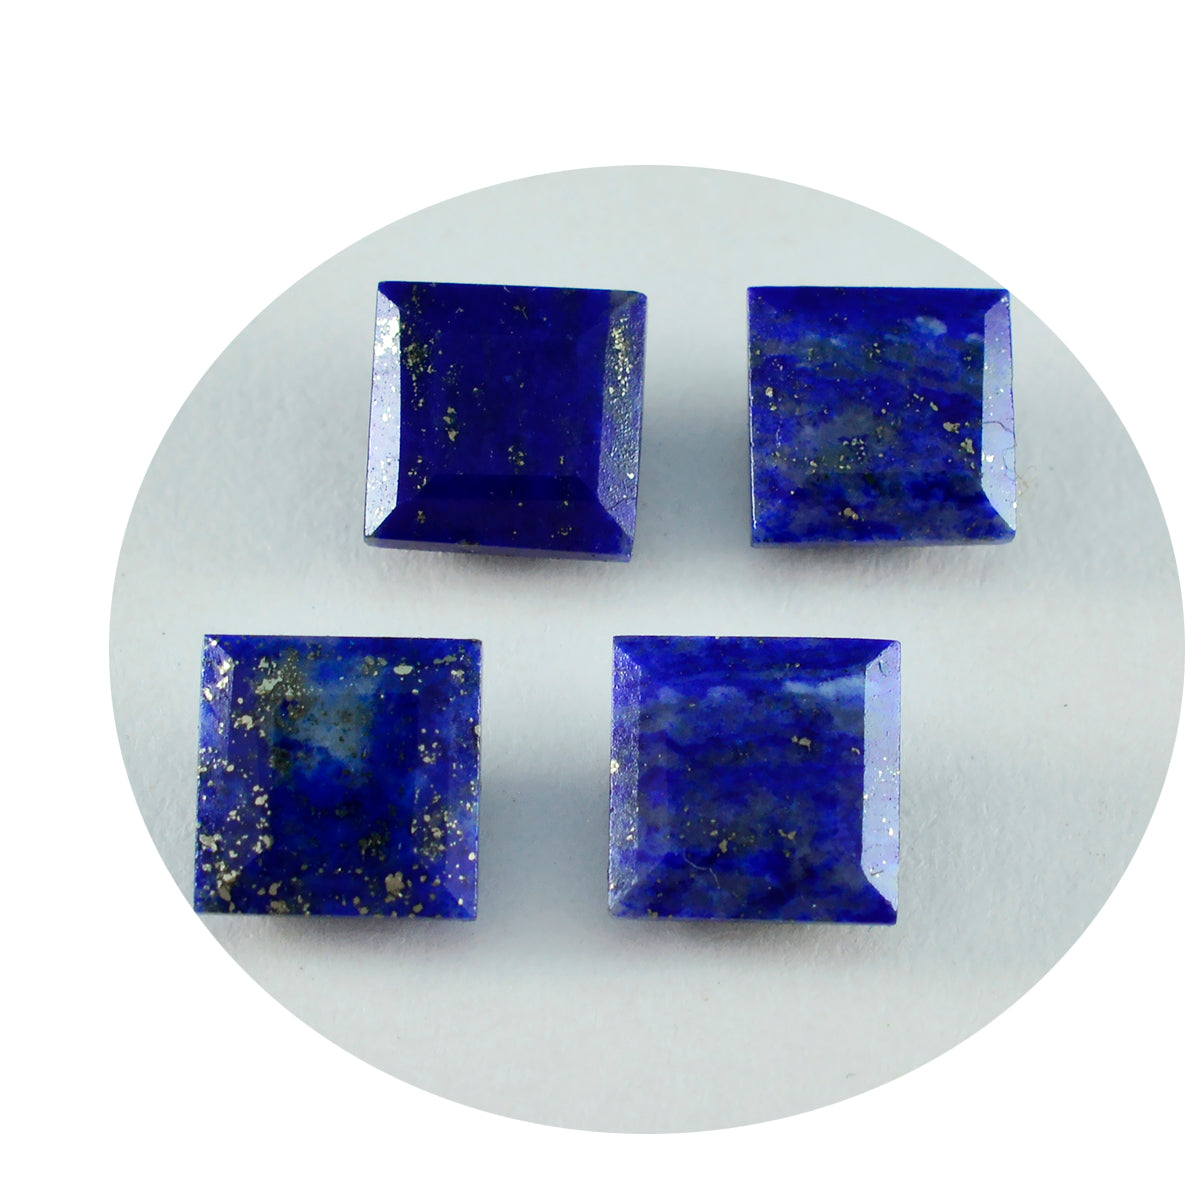 Riyogems 1PC Echte Blauwe Lapis Lazuli Facet 9x9 mm Vierkante Vorm verbazingwekkende Kwaliteit Edelsteen